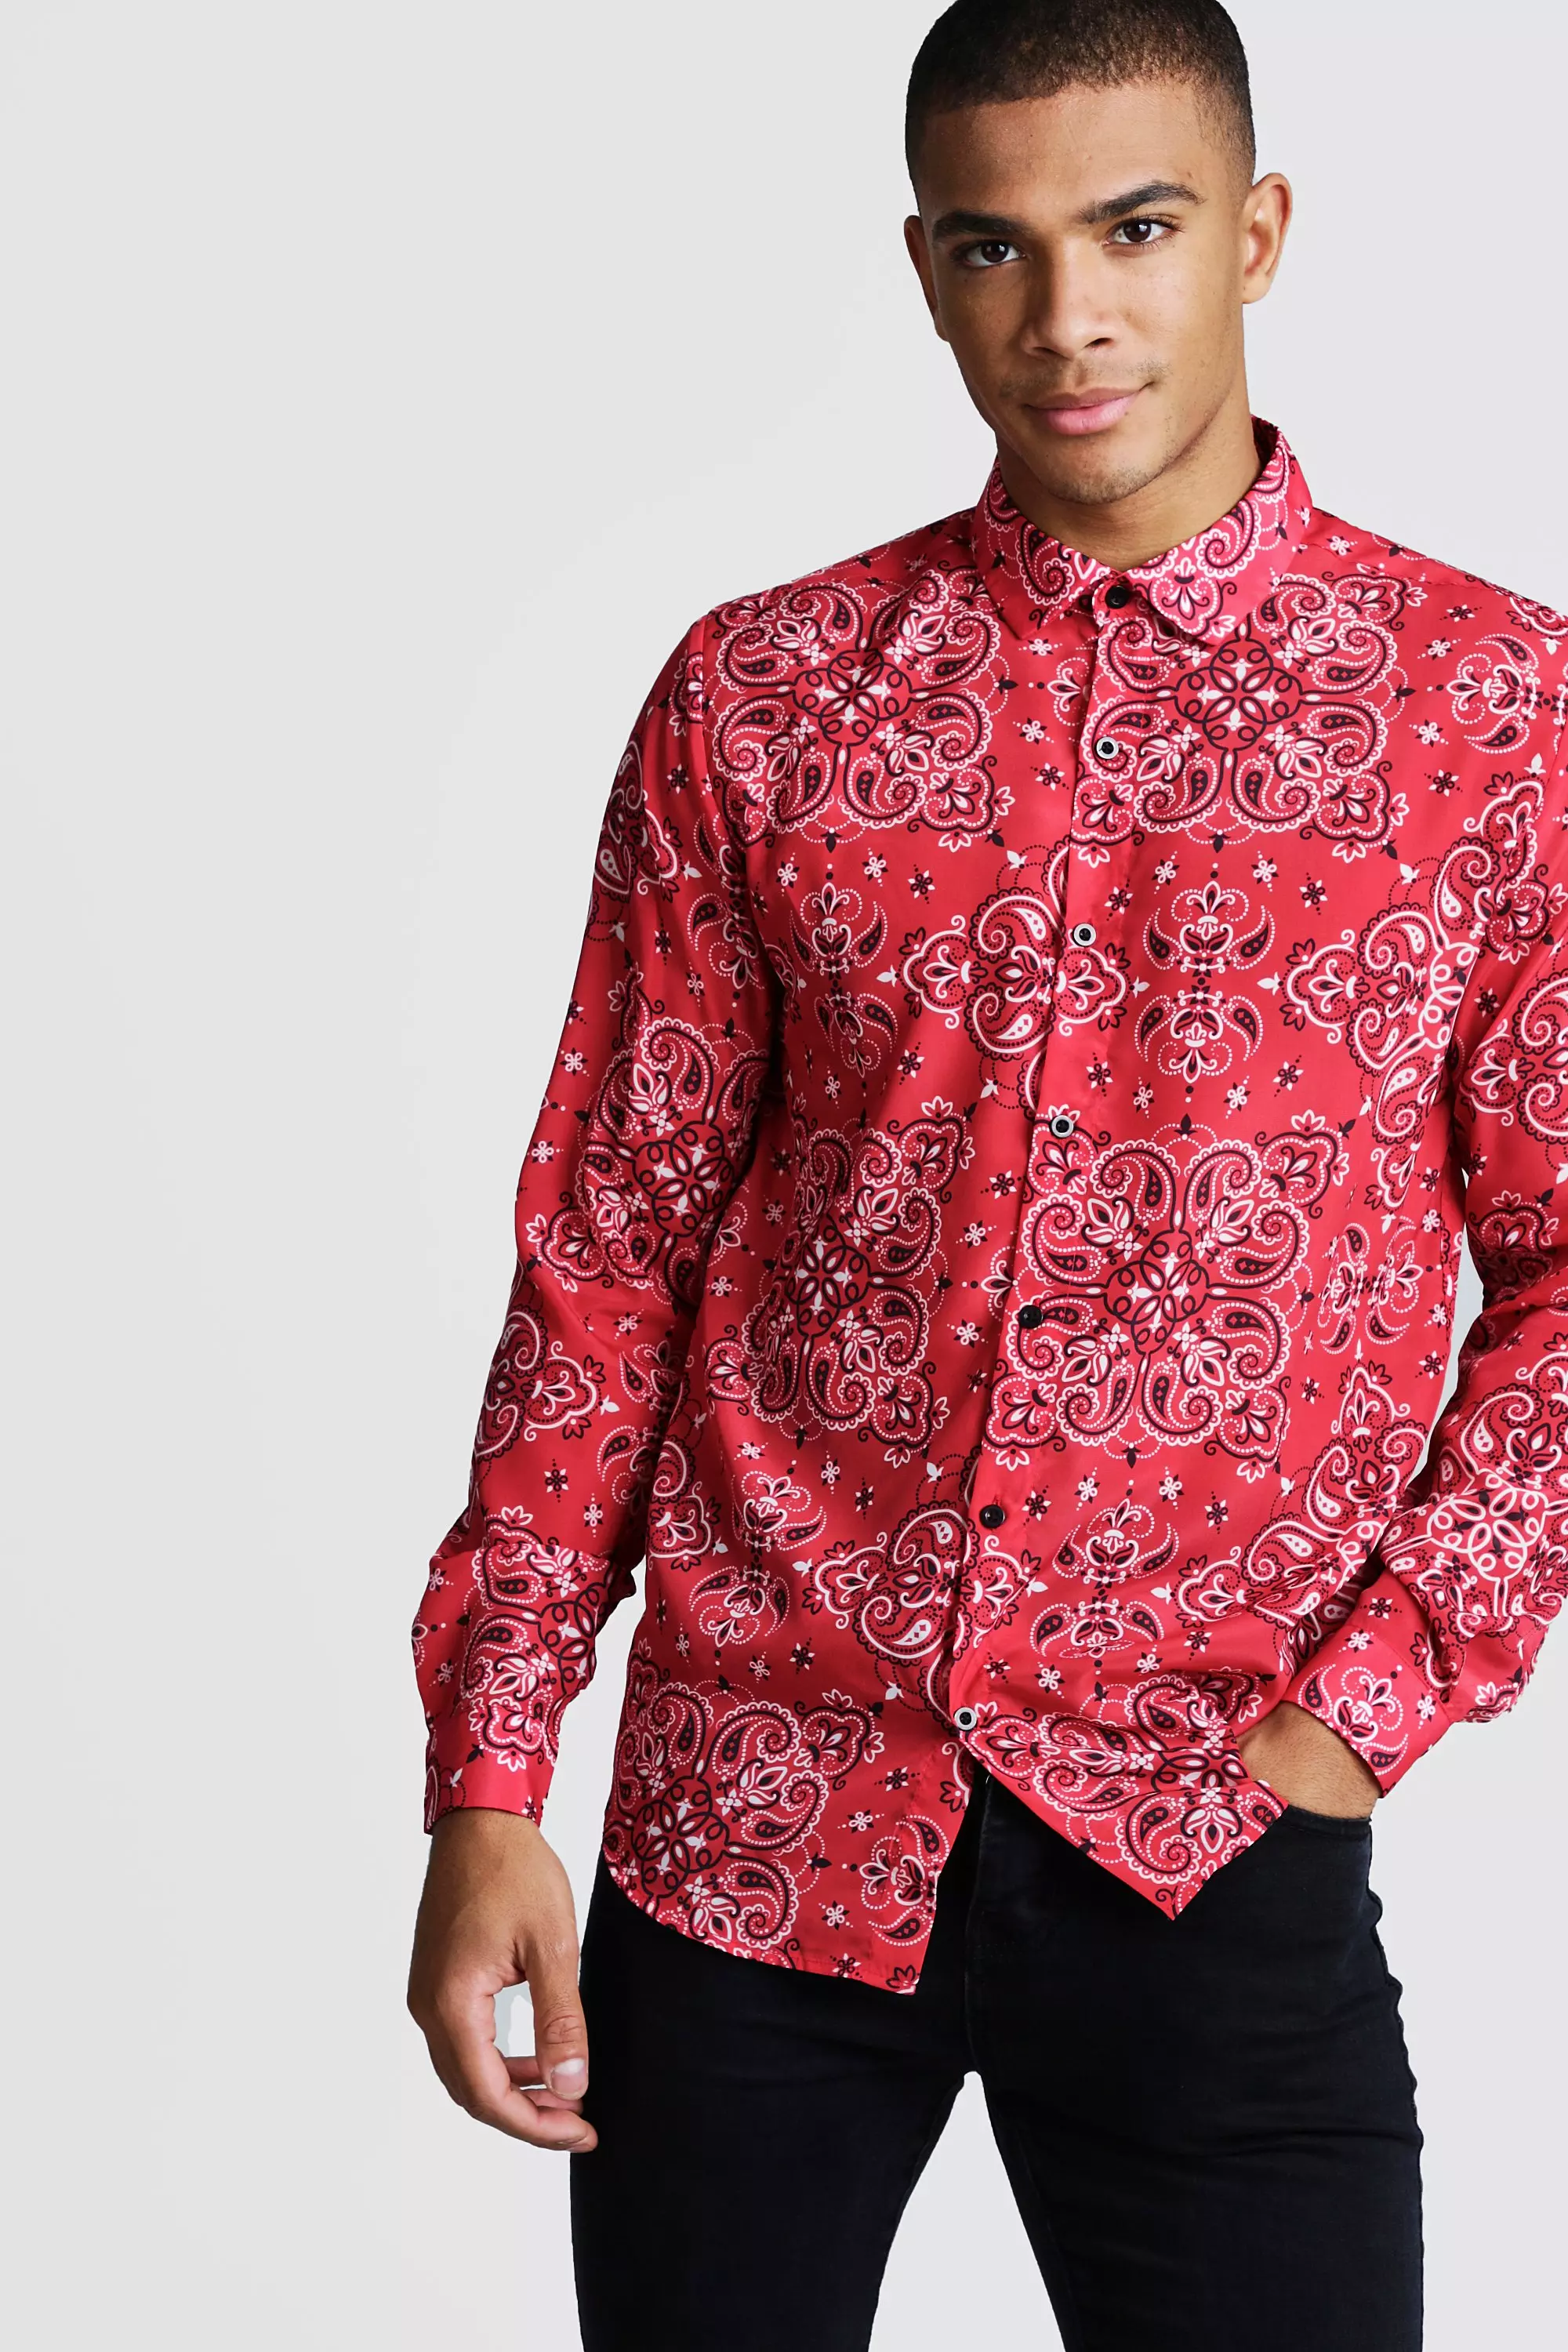 ASOS DESIGN oversized shirt in red bandana print - part of a set